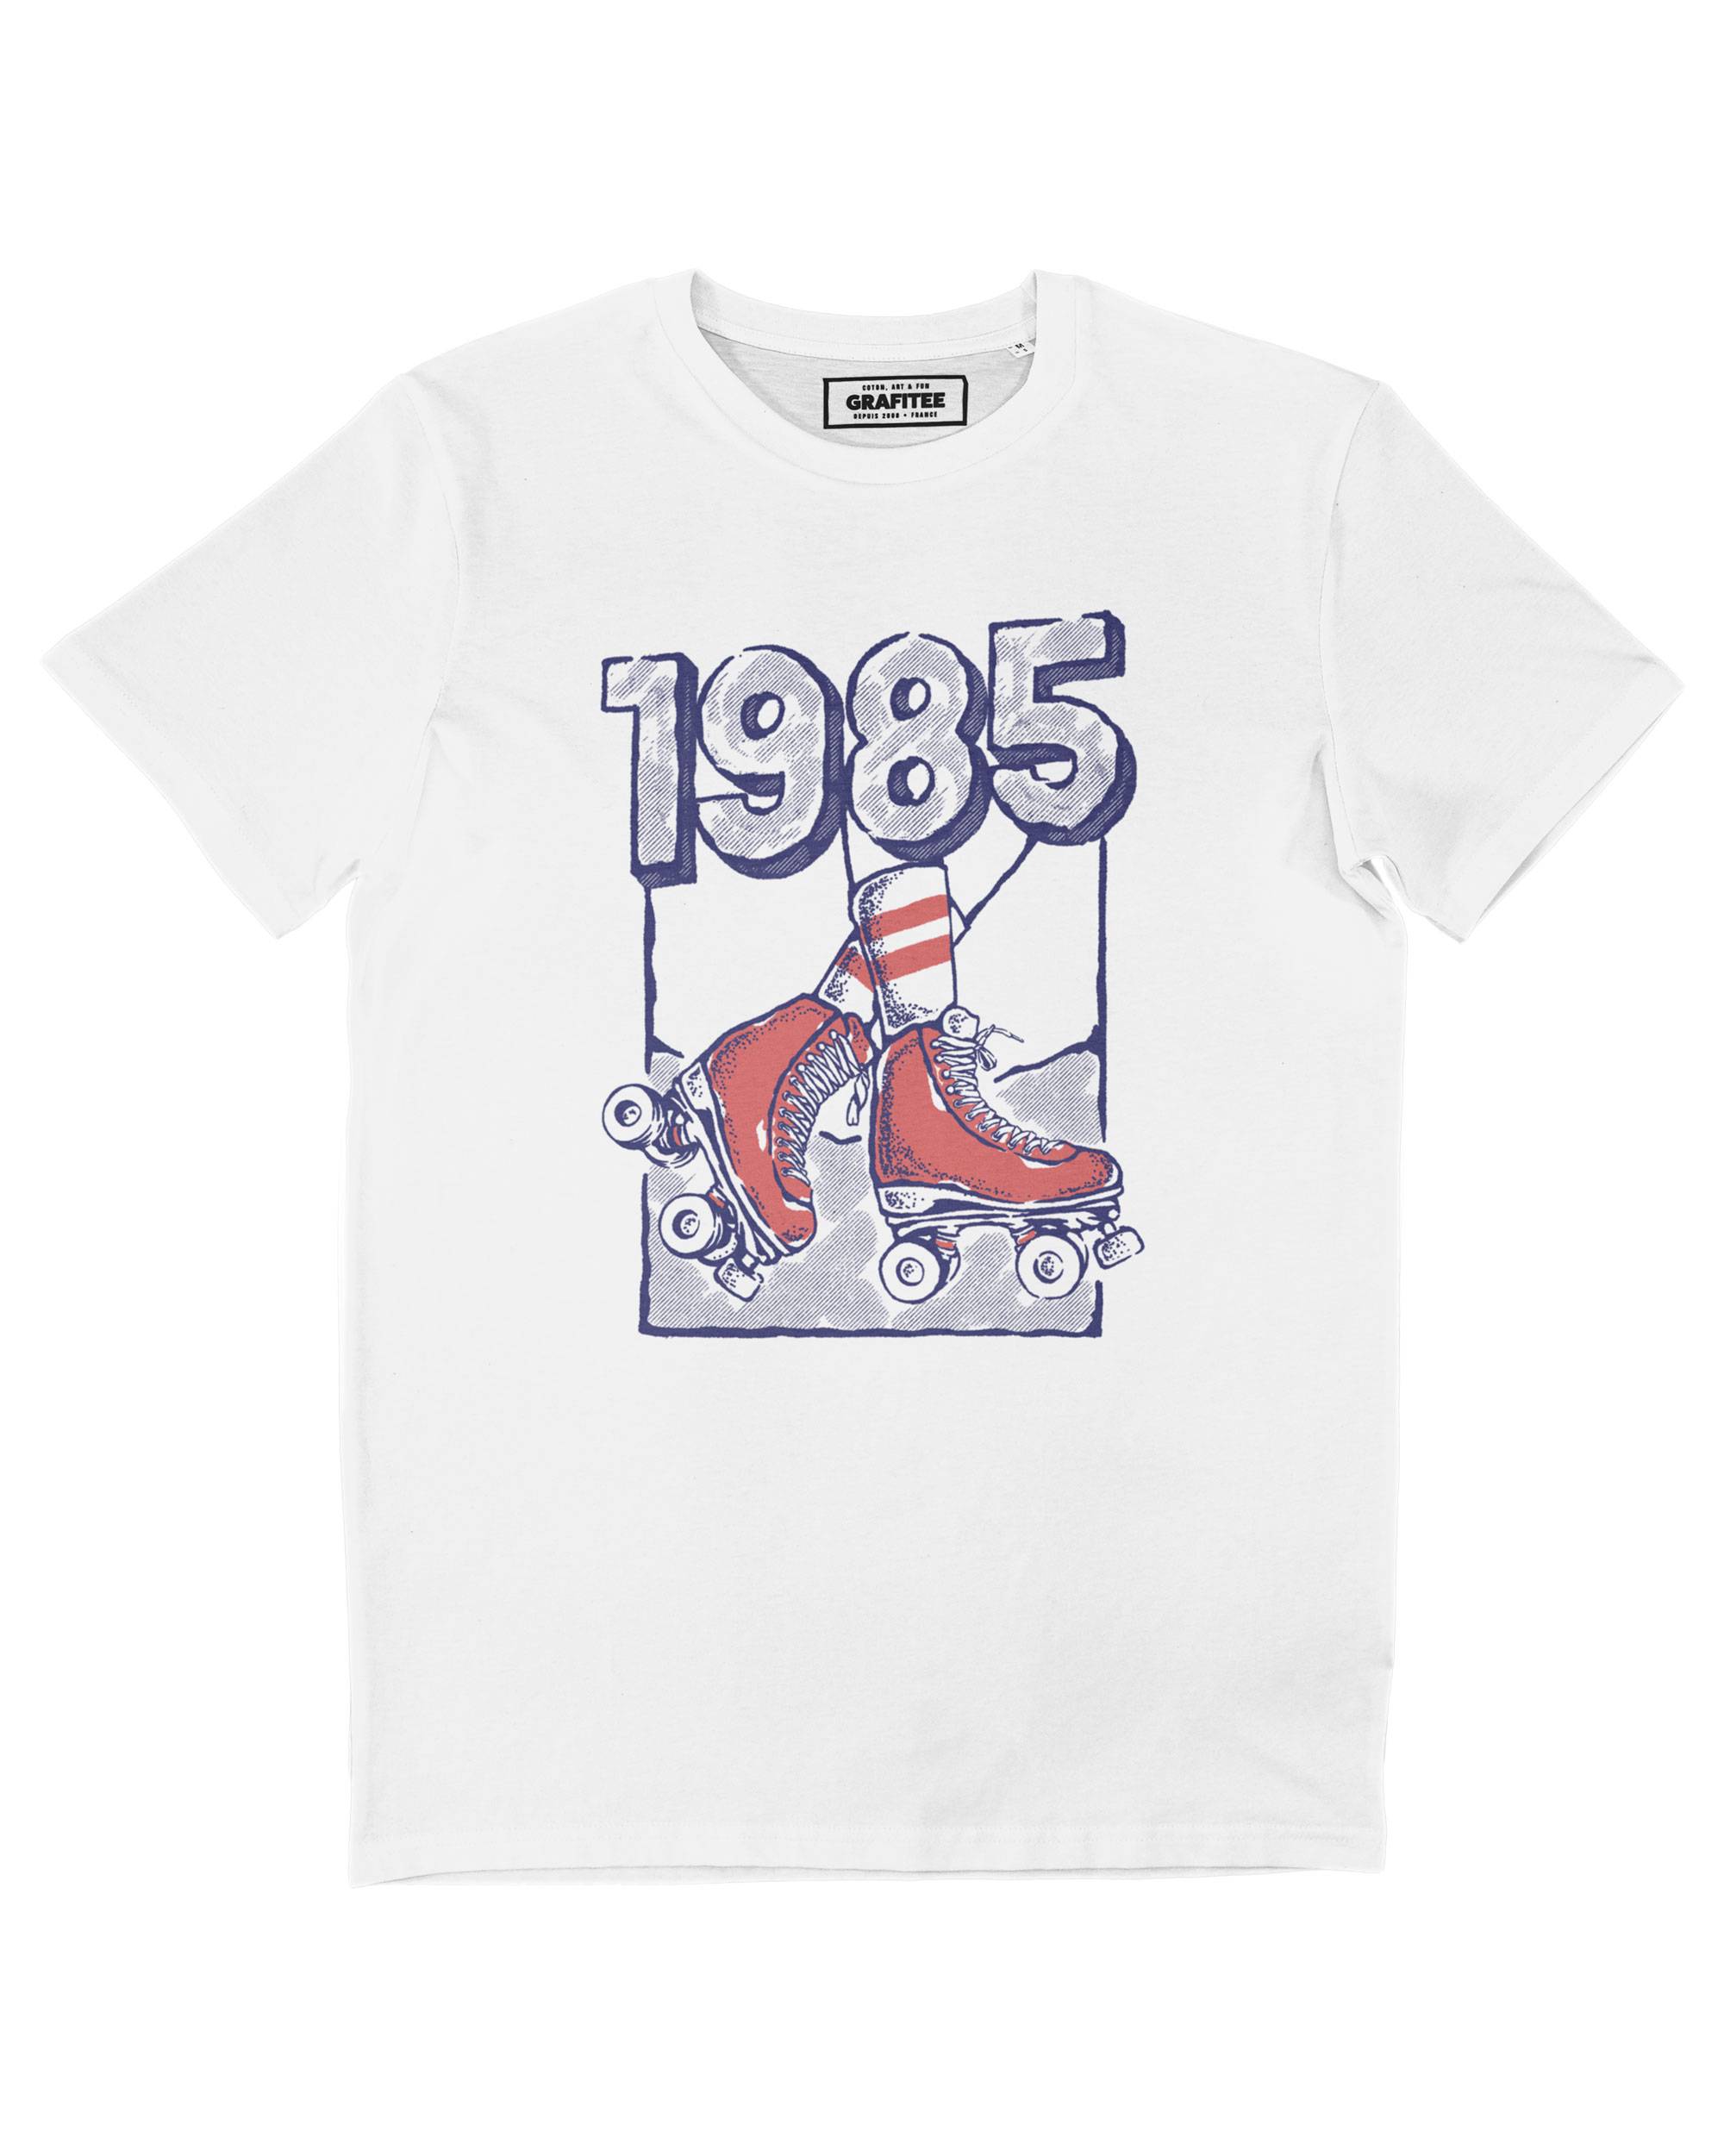 T-shirt 1985 Grafitee